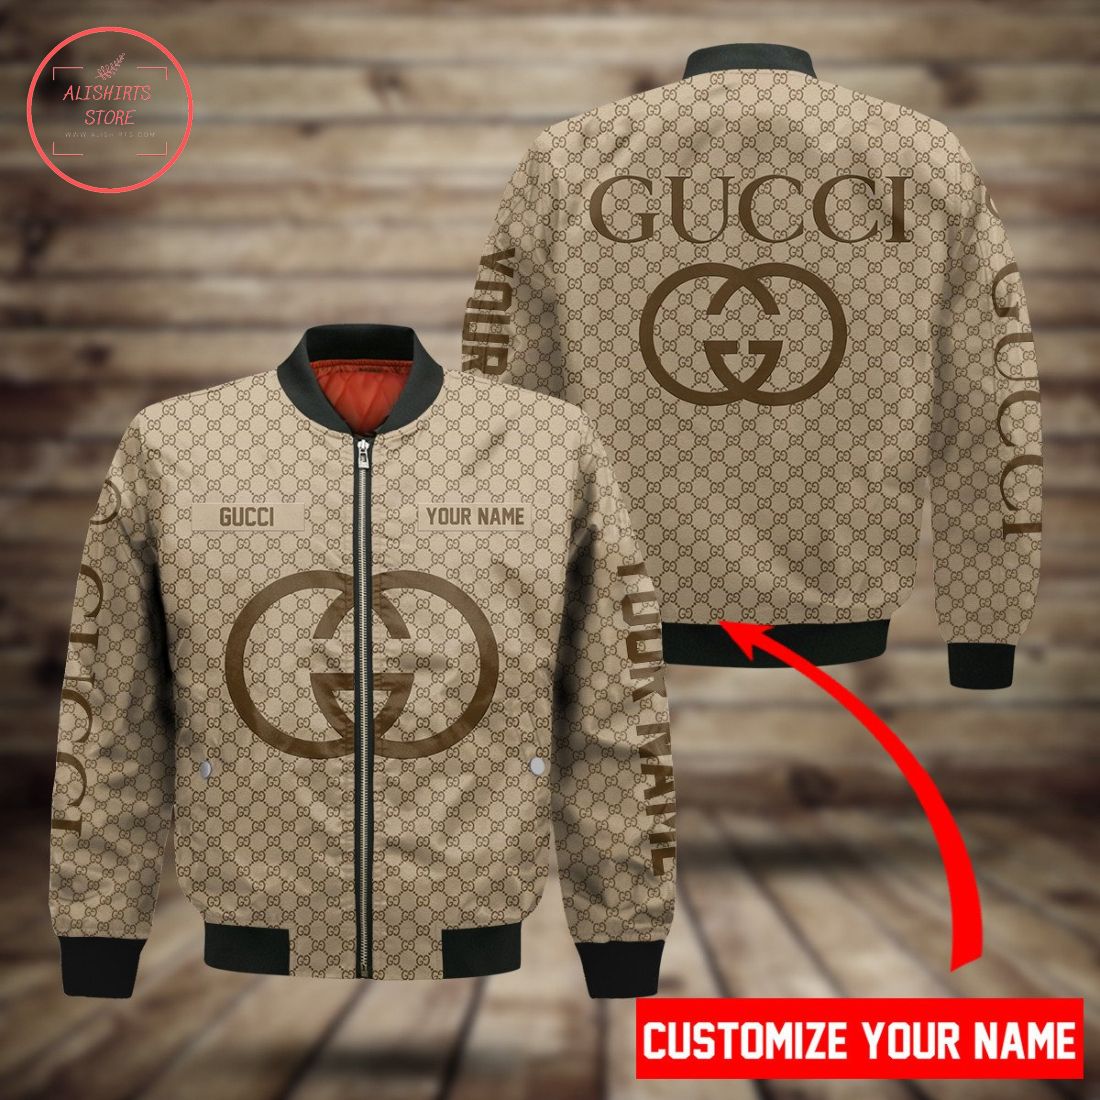 Gucci Customized Luxury Brand Bomber Jacket